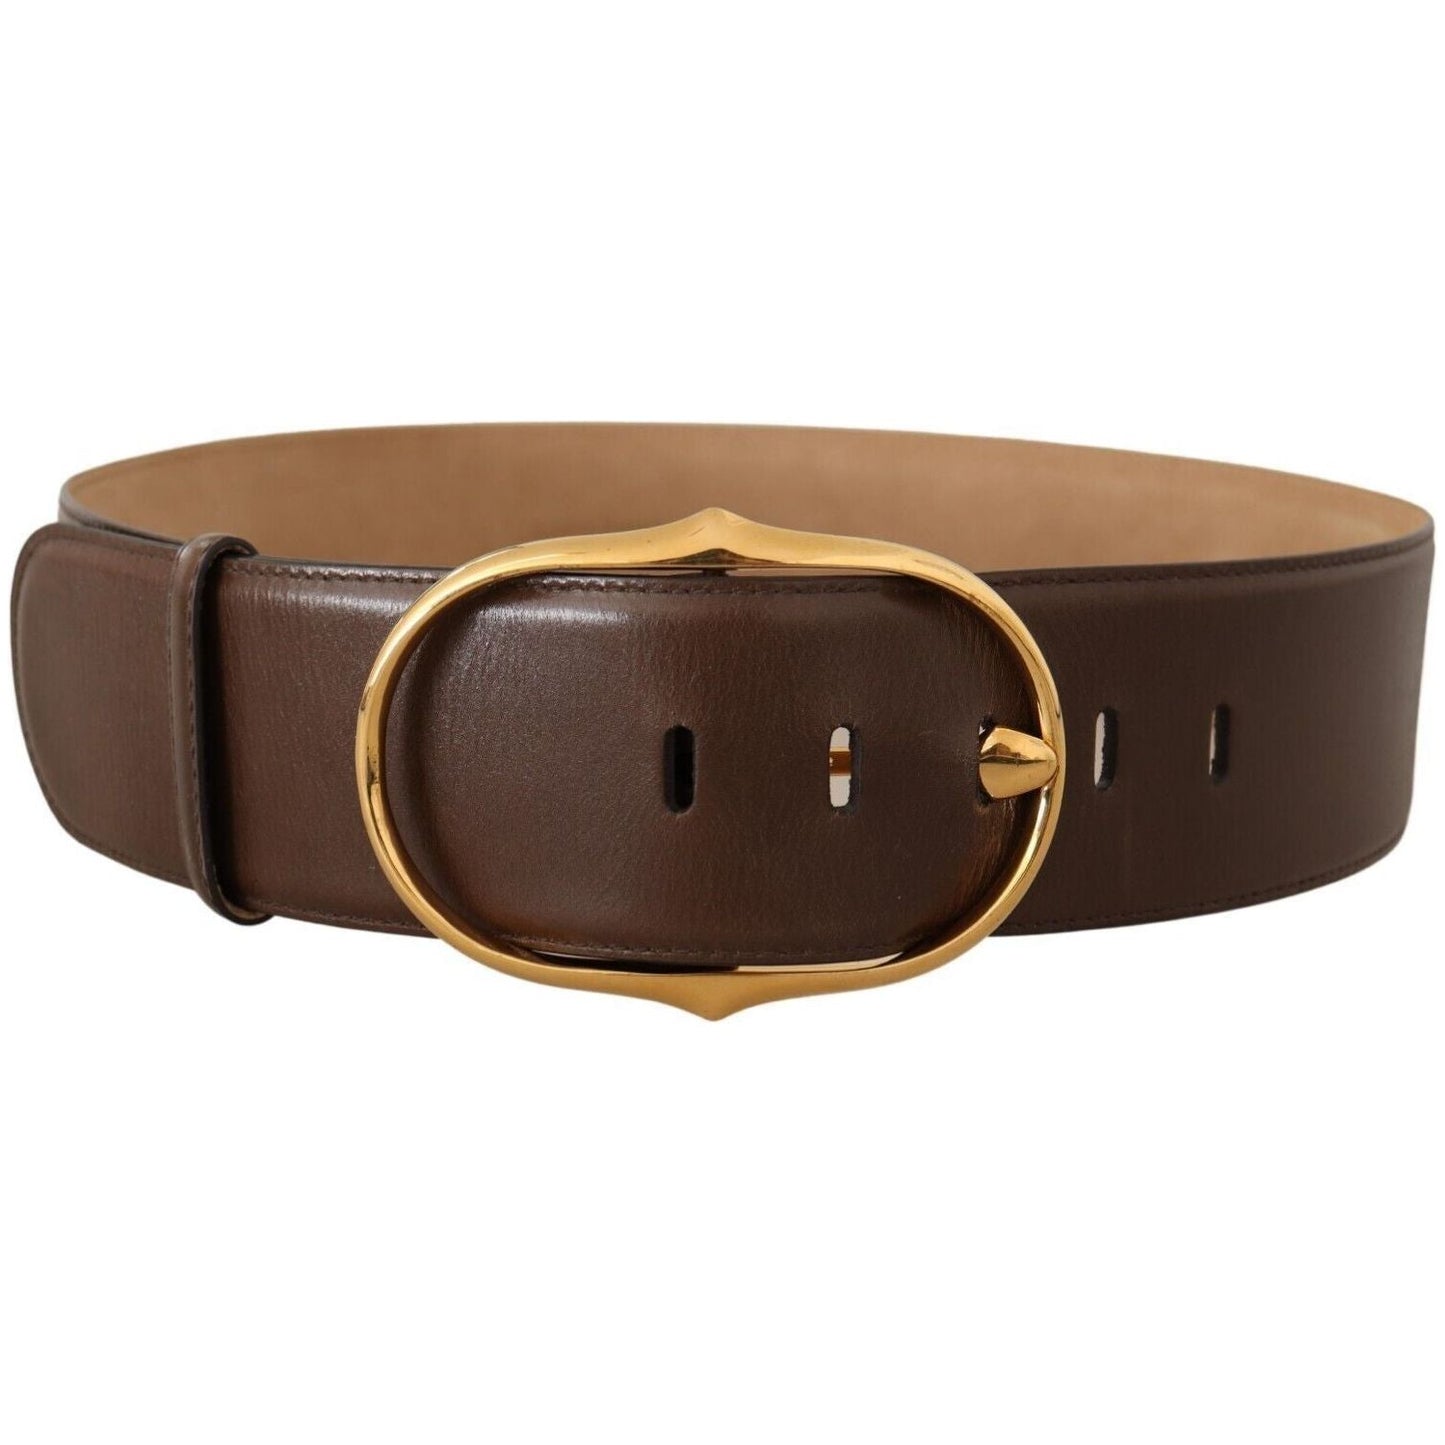 Dolce & Gabbana Elegant Brown Leather Belt with Gold Buckle brown-leather-gold-metal-oval-buckle-belt-7 s-l1600-294-11d16fa6-fb7.jpg